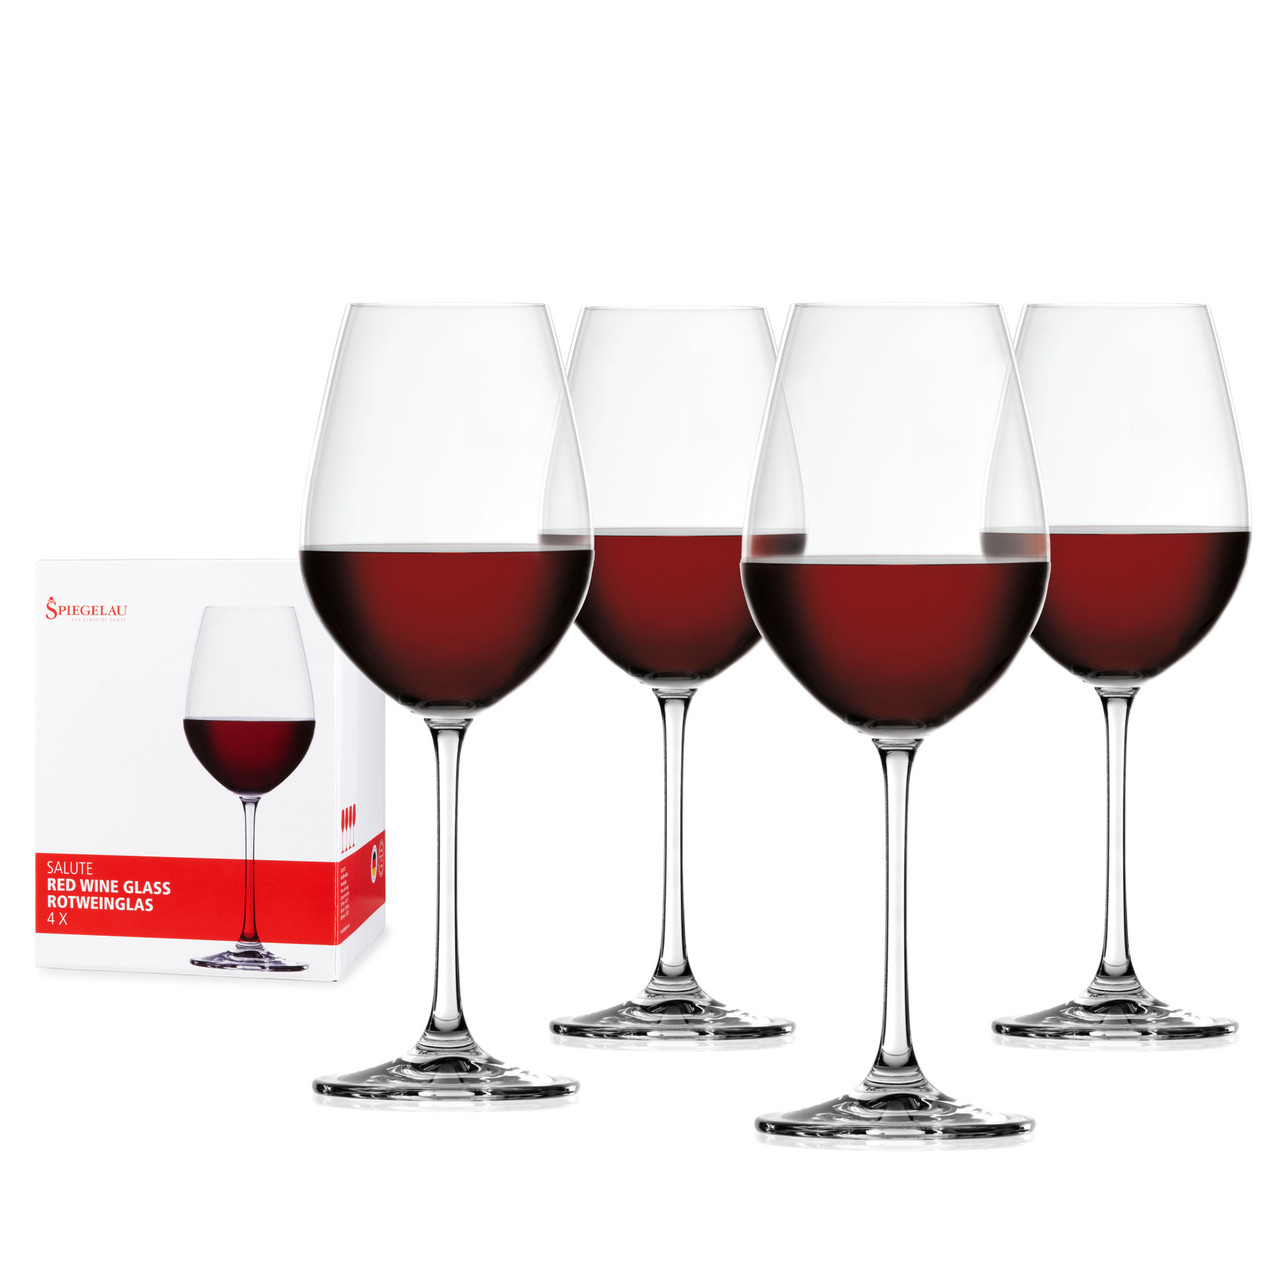 Spiegelau Salute 19.4 oz Red Wine glass (set of 4)